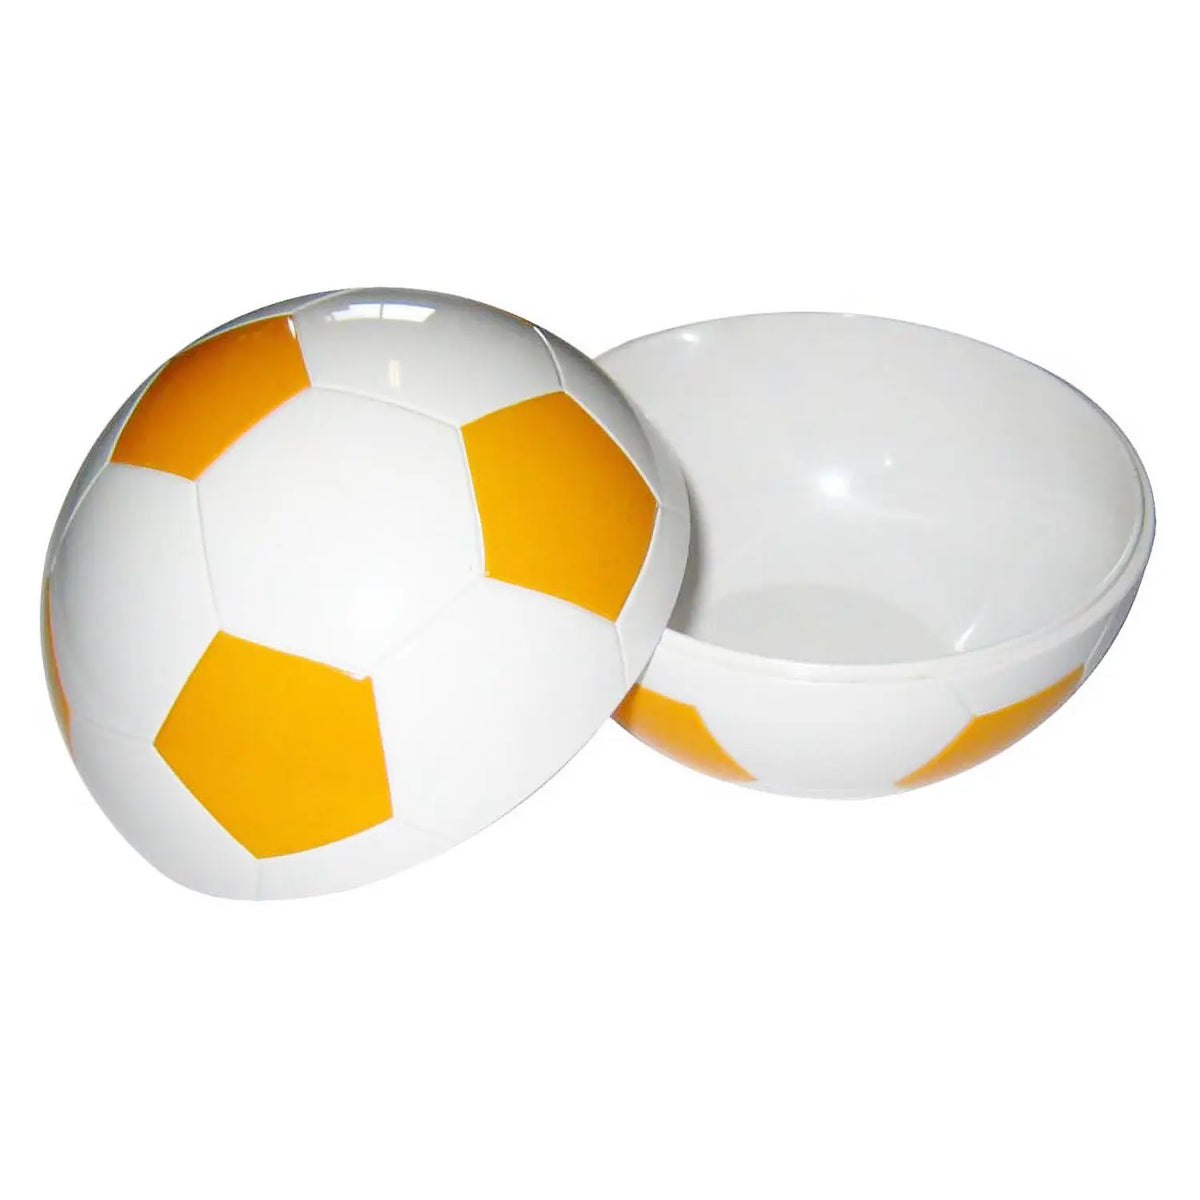 EBM ABS Resin Kids Plate Soccer Ball